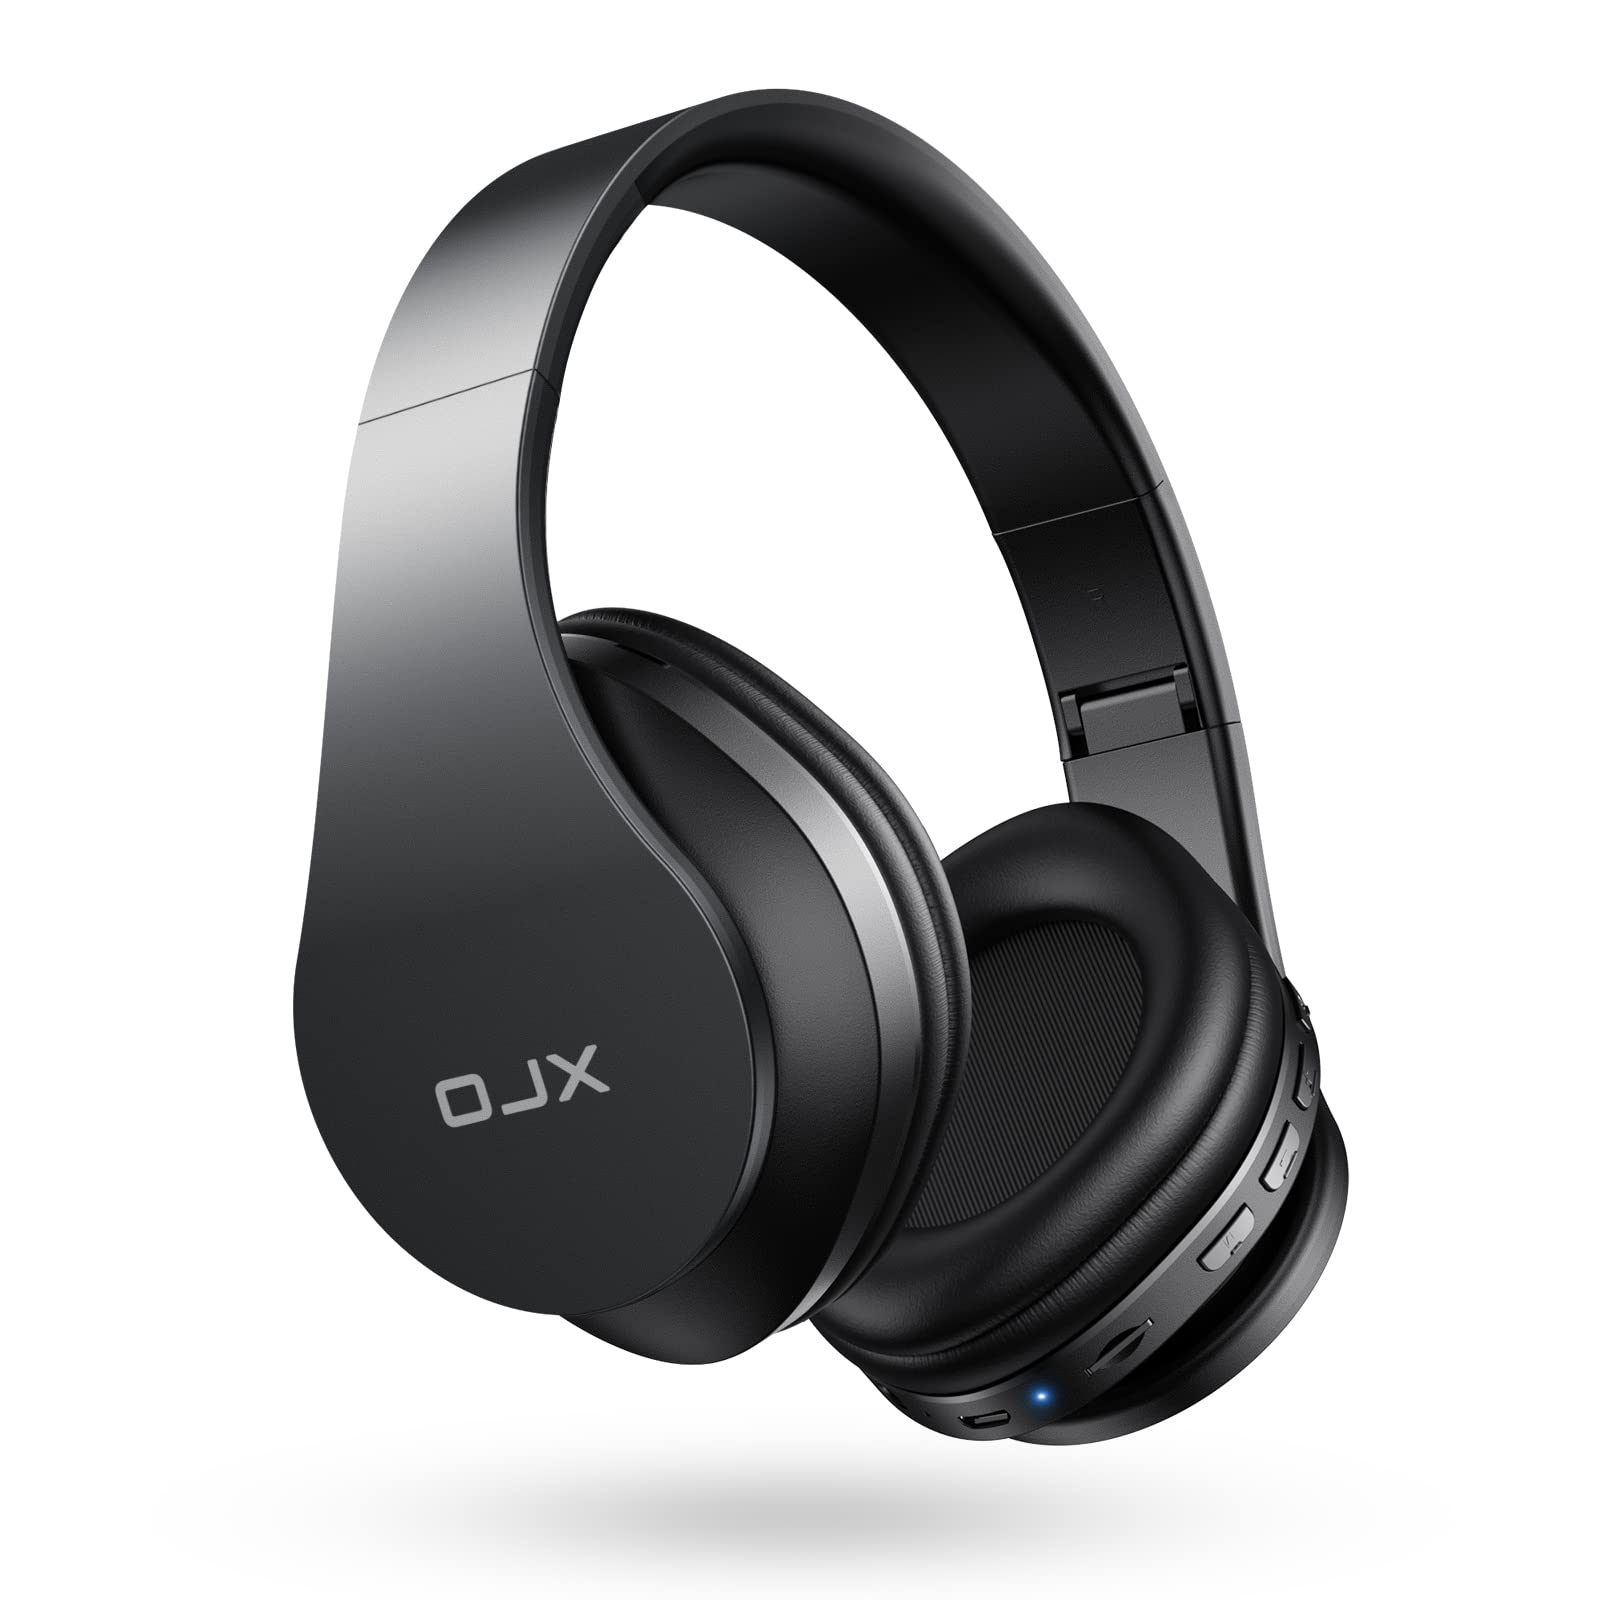 OJX Bluetooth5.3 ワイヤレスヘッドホンヘッドホン bluetooth ワイヤレス マイク付き ヘッドフォン 有線 無線 両用 高安定性 超低遅延 20